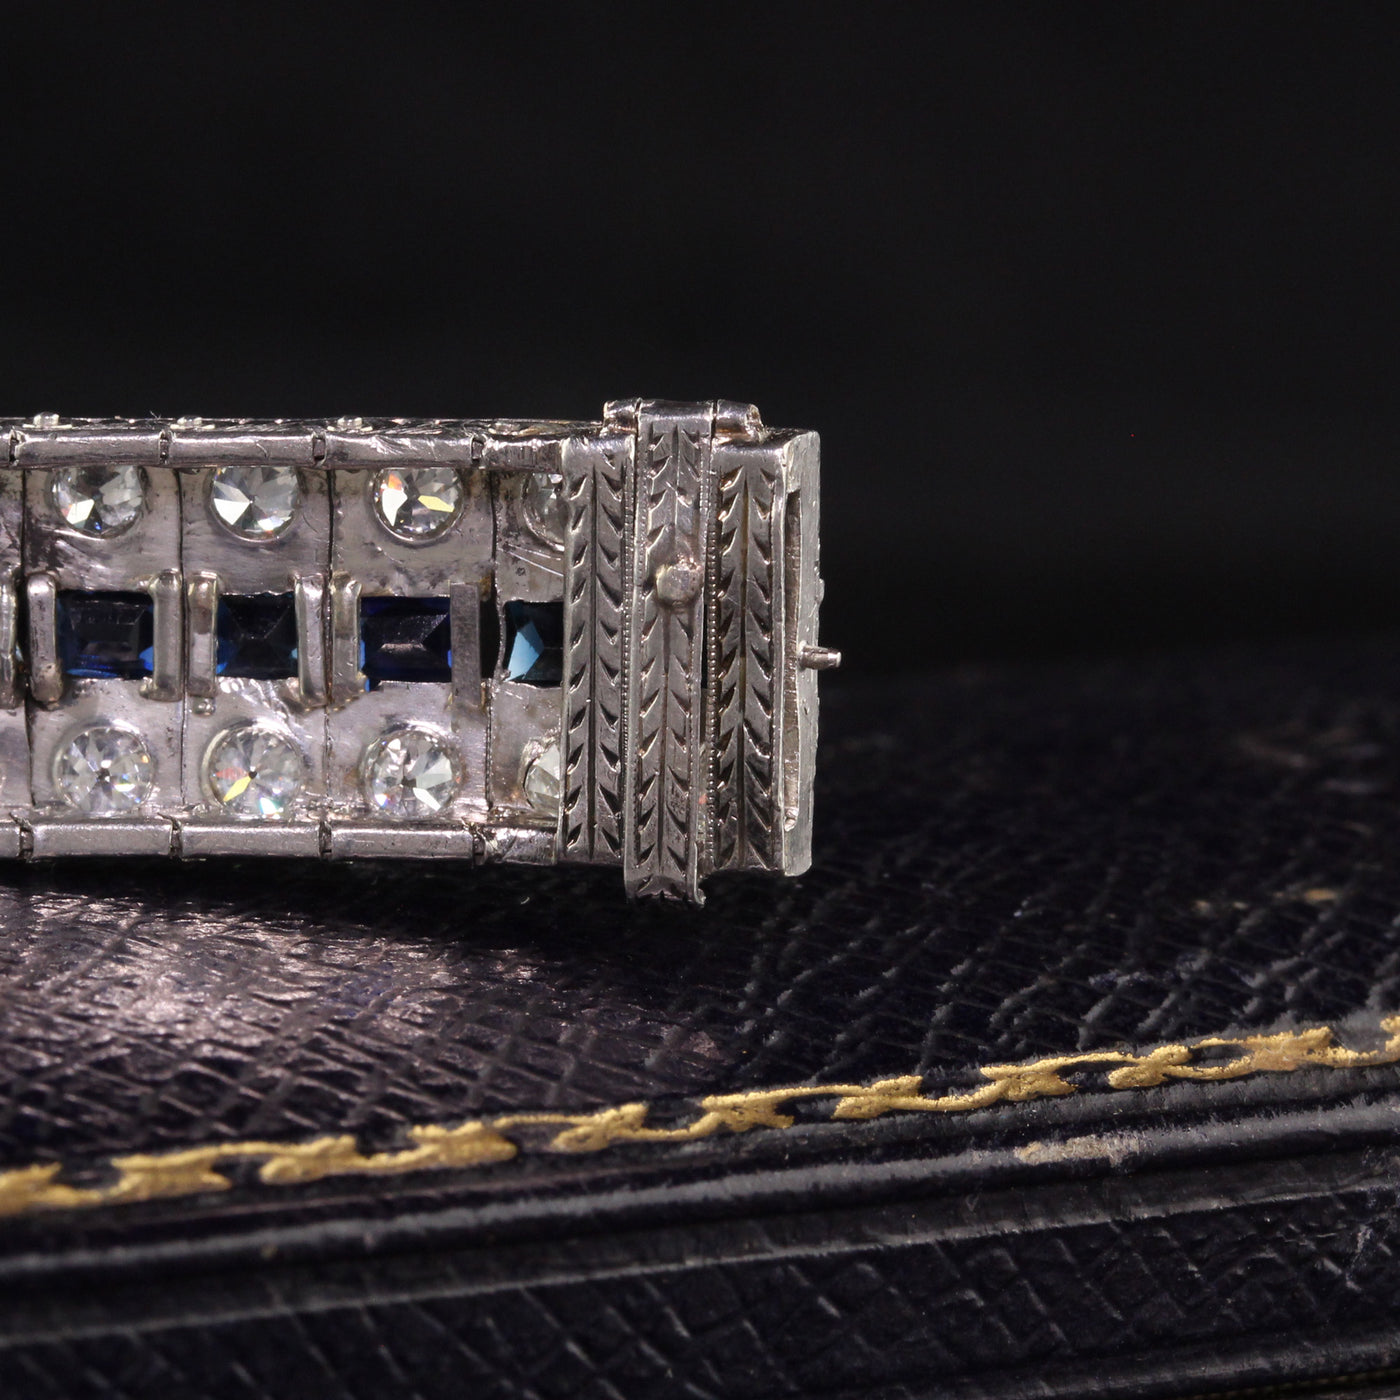 Antique Art Deco Platinum Old European Diamond and Sapphire Line Bracelet